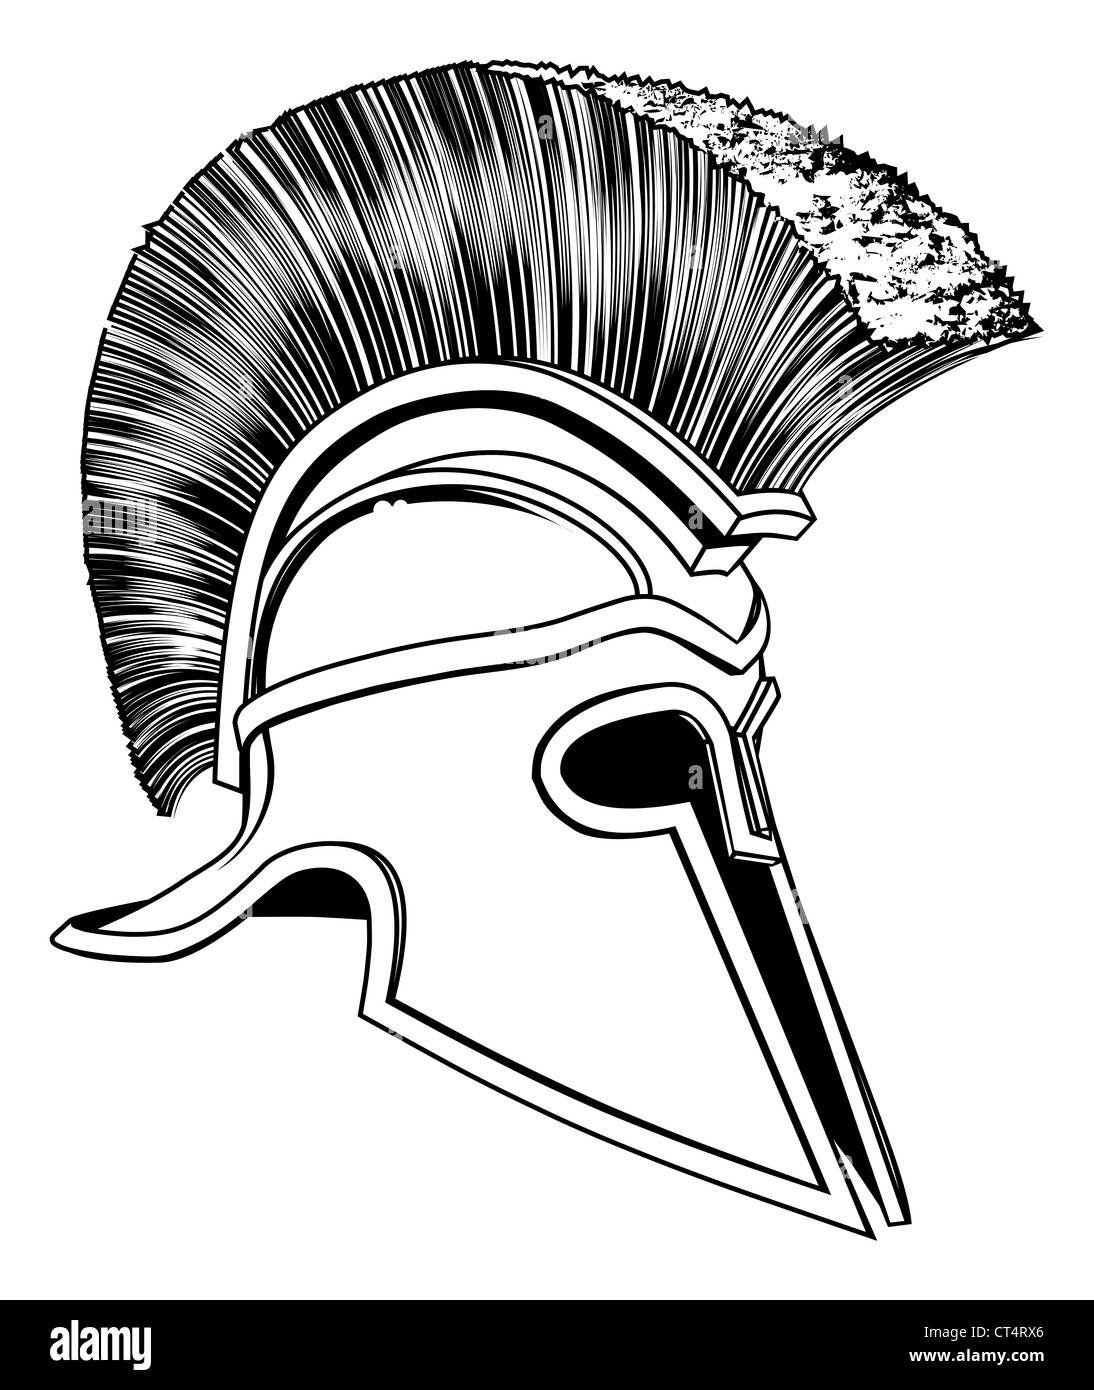 https://c8.alamy.com/compes/ct4rx6/grafico-de-un-casco-troyano-de-bronce-espartano-casco-casco-casco-romano-o-griego-estilo-corintio-ct4rx6.jpg